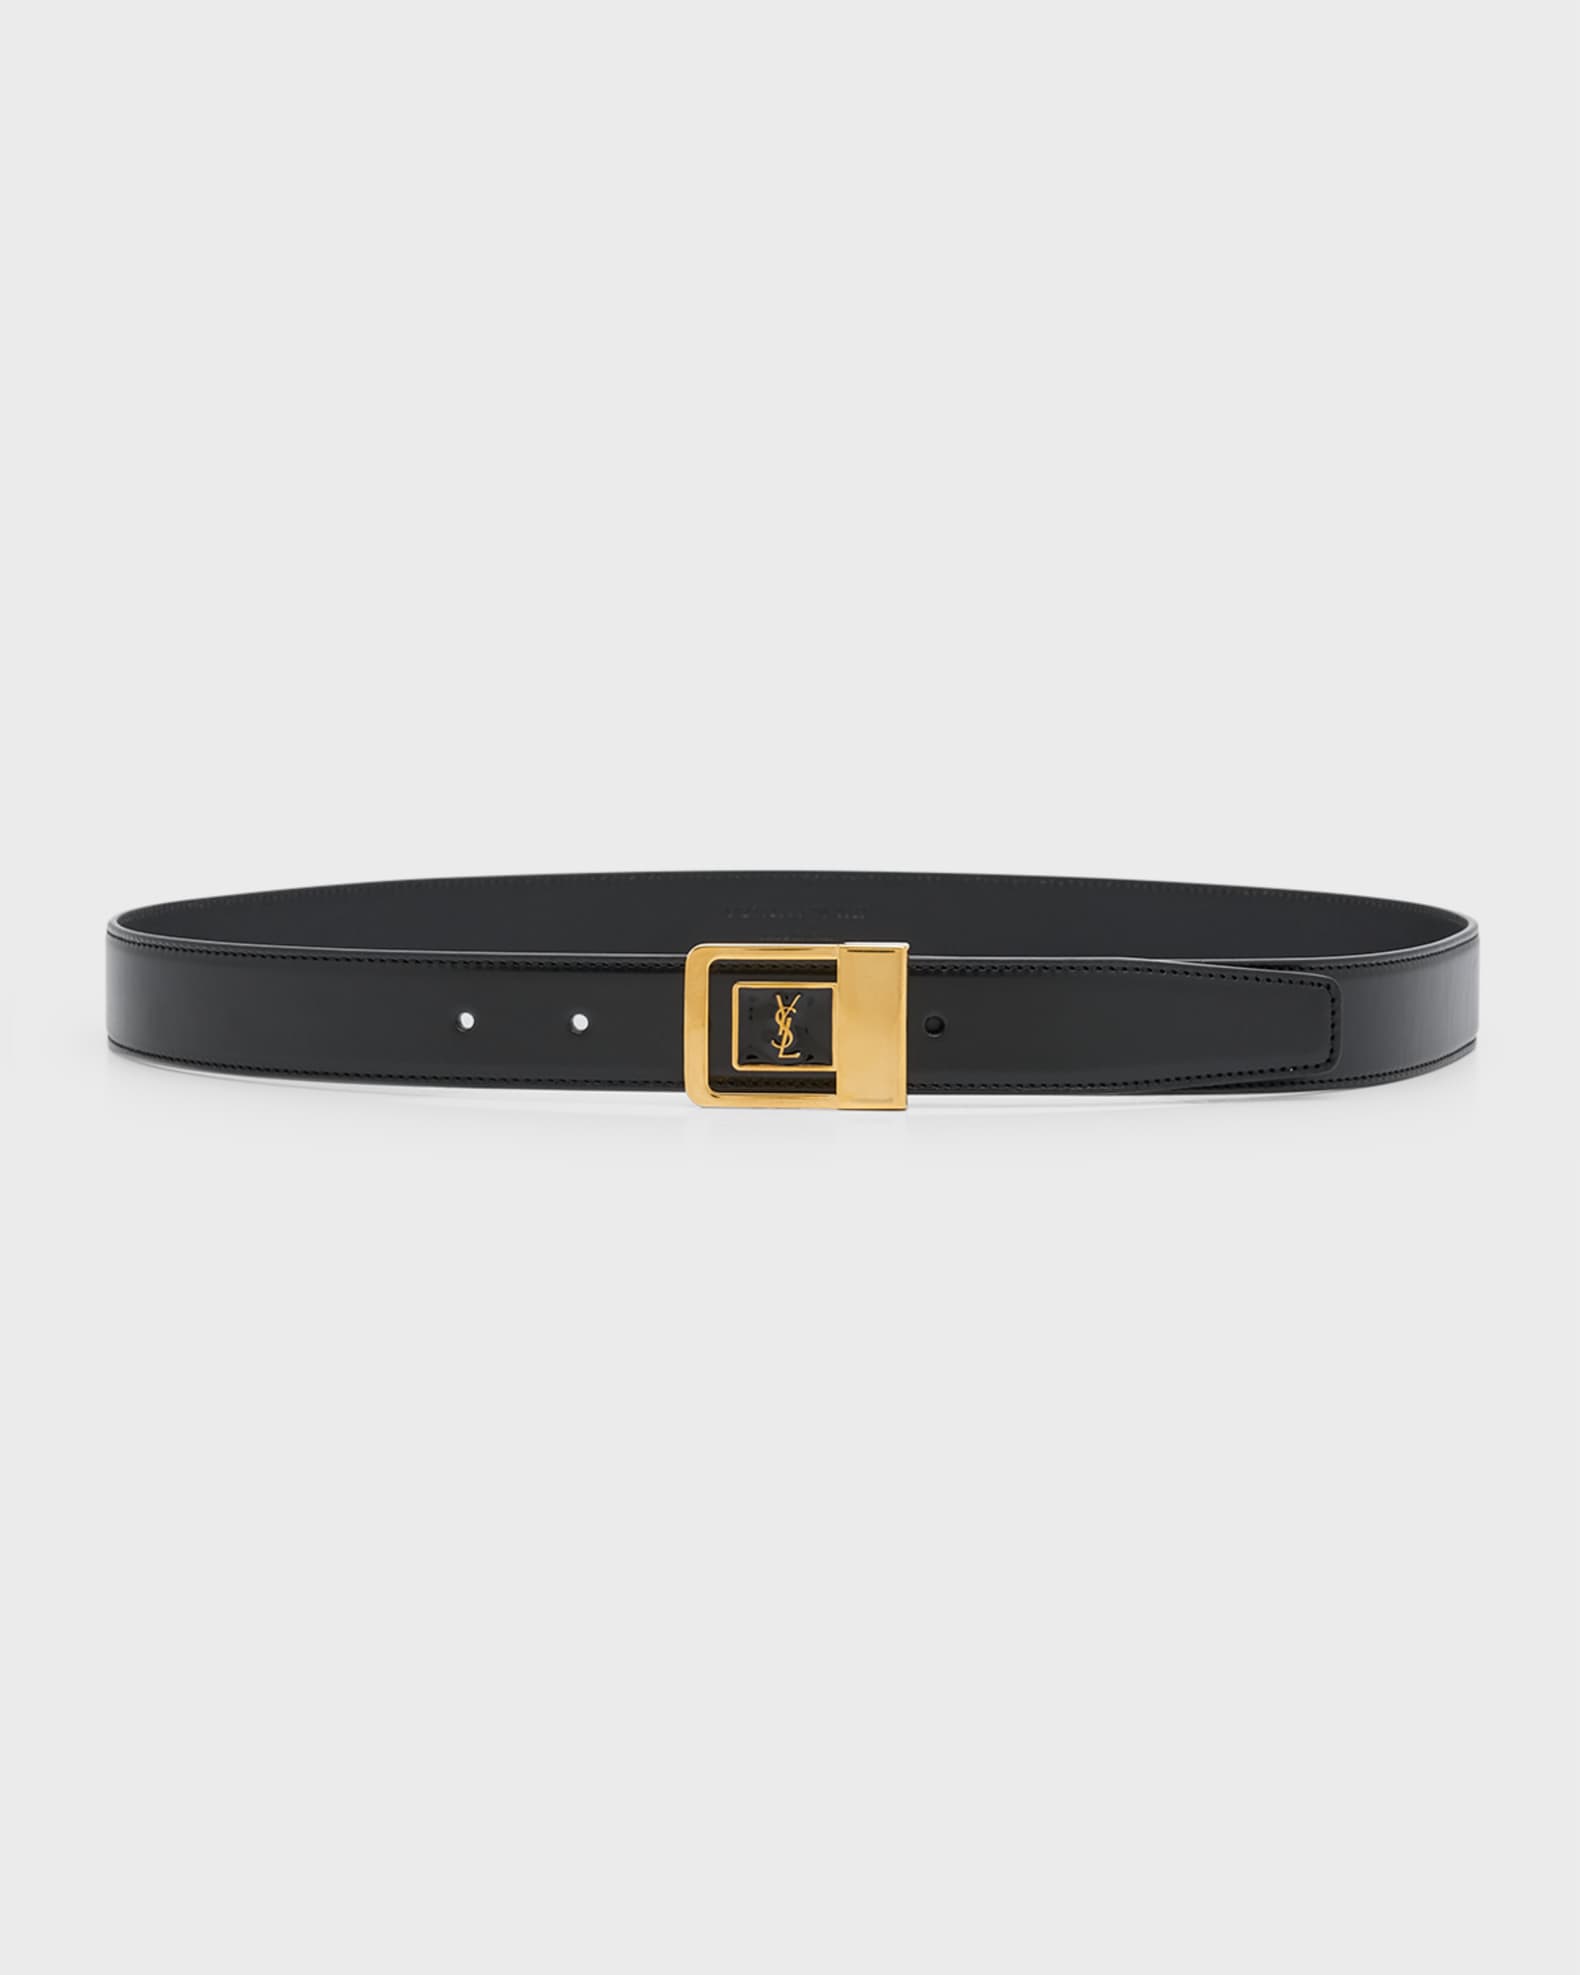 Saint Laurent YSL Buckle Leather Belt | Neiman Marcus